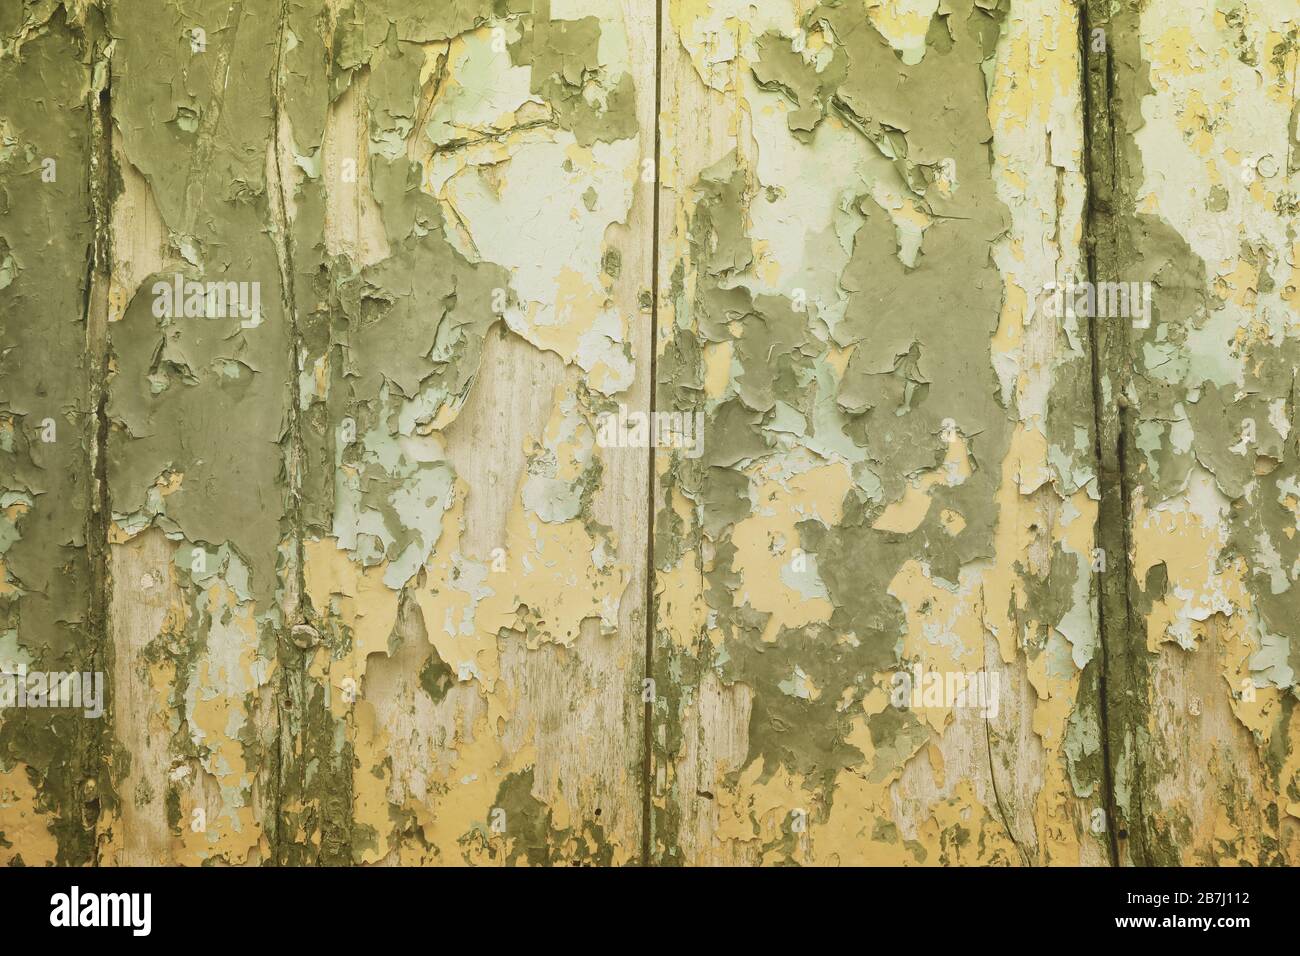 Peeling paint vintage texture. Grunge style old wooden door background. Stock Photo